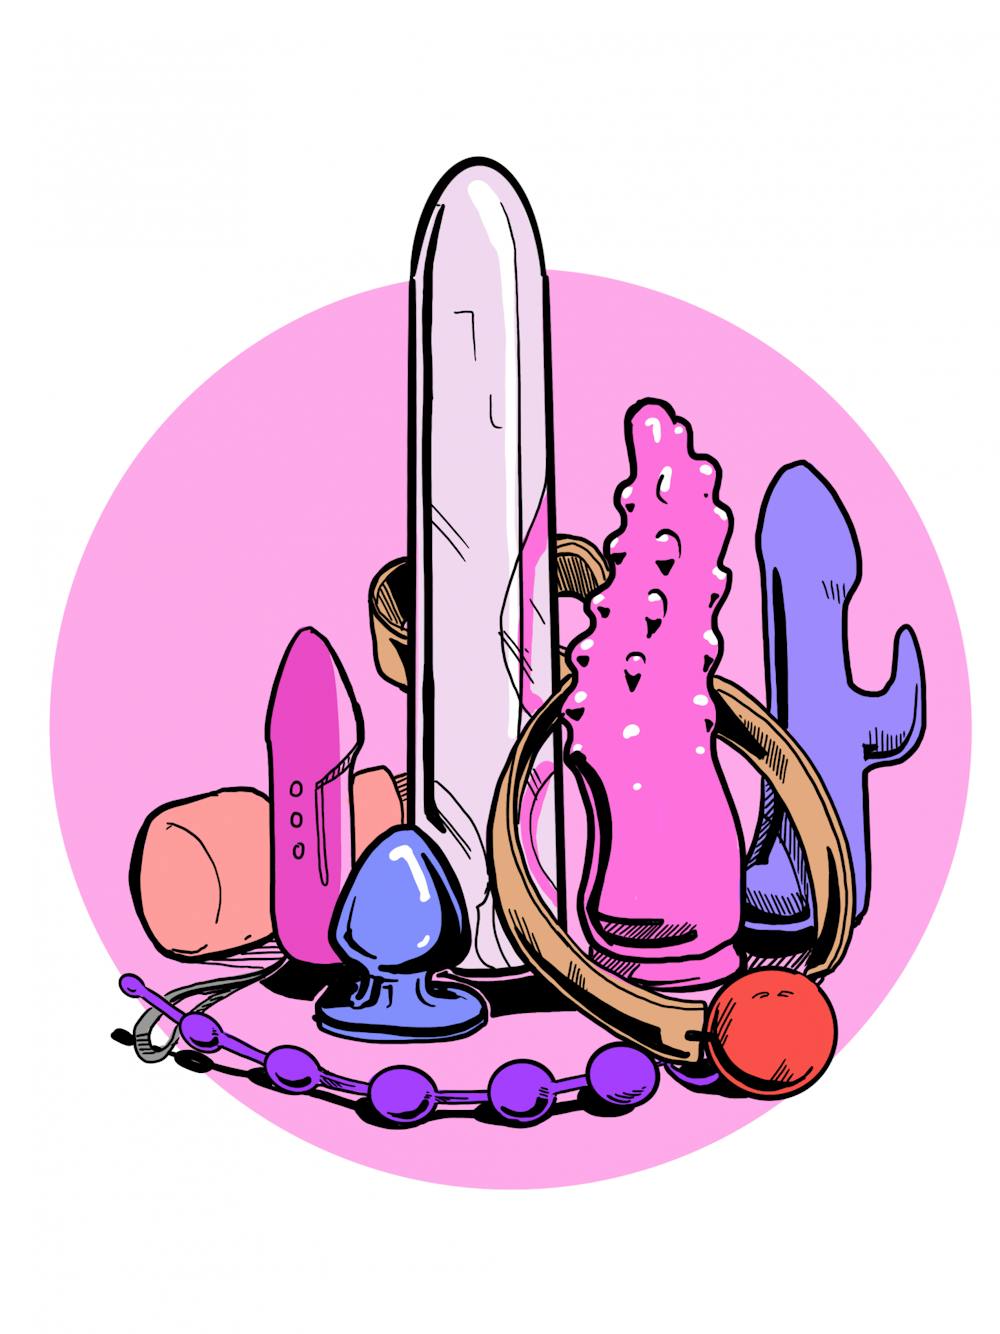 Sex toys illustration